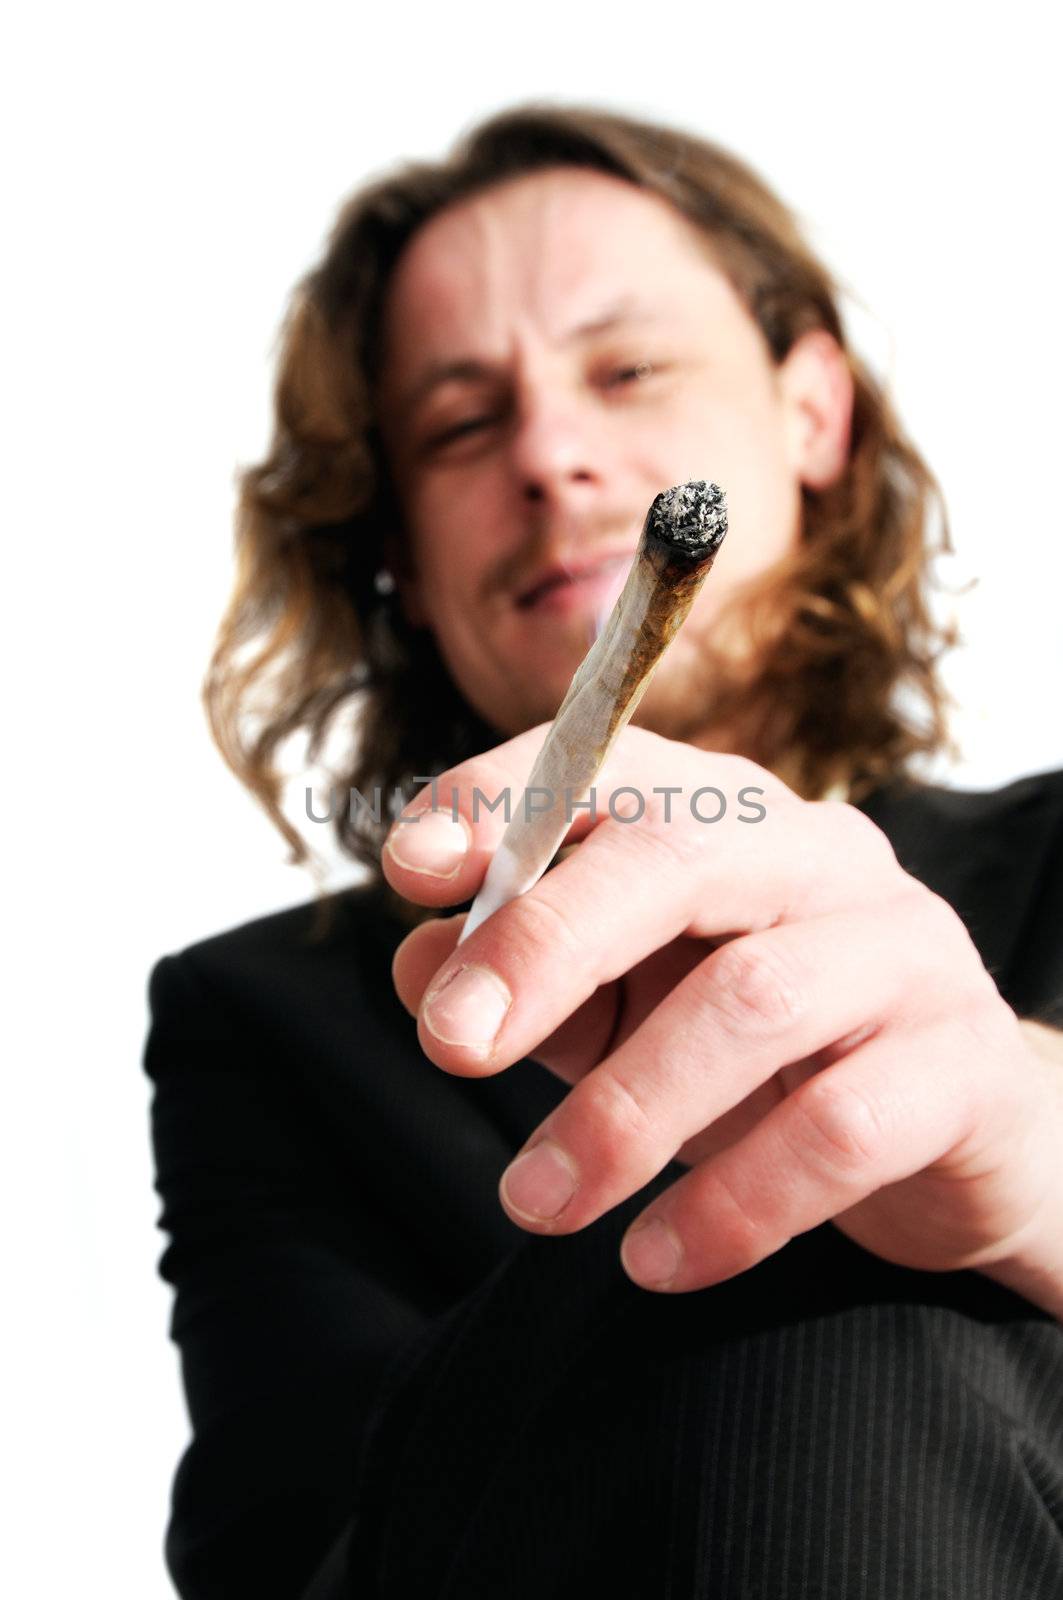 Man smoking weed by fahrner